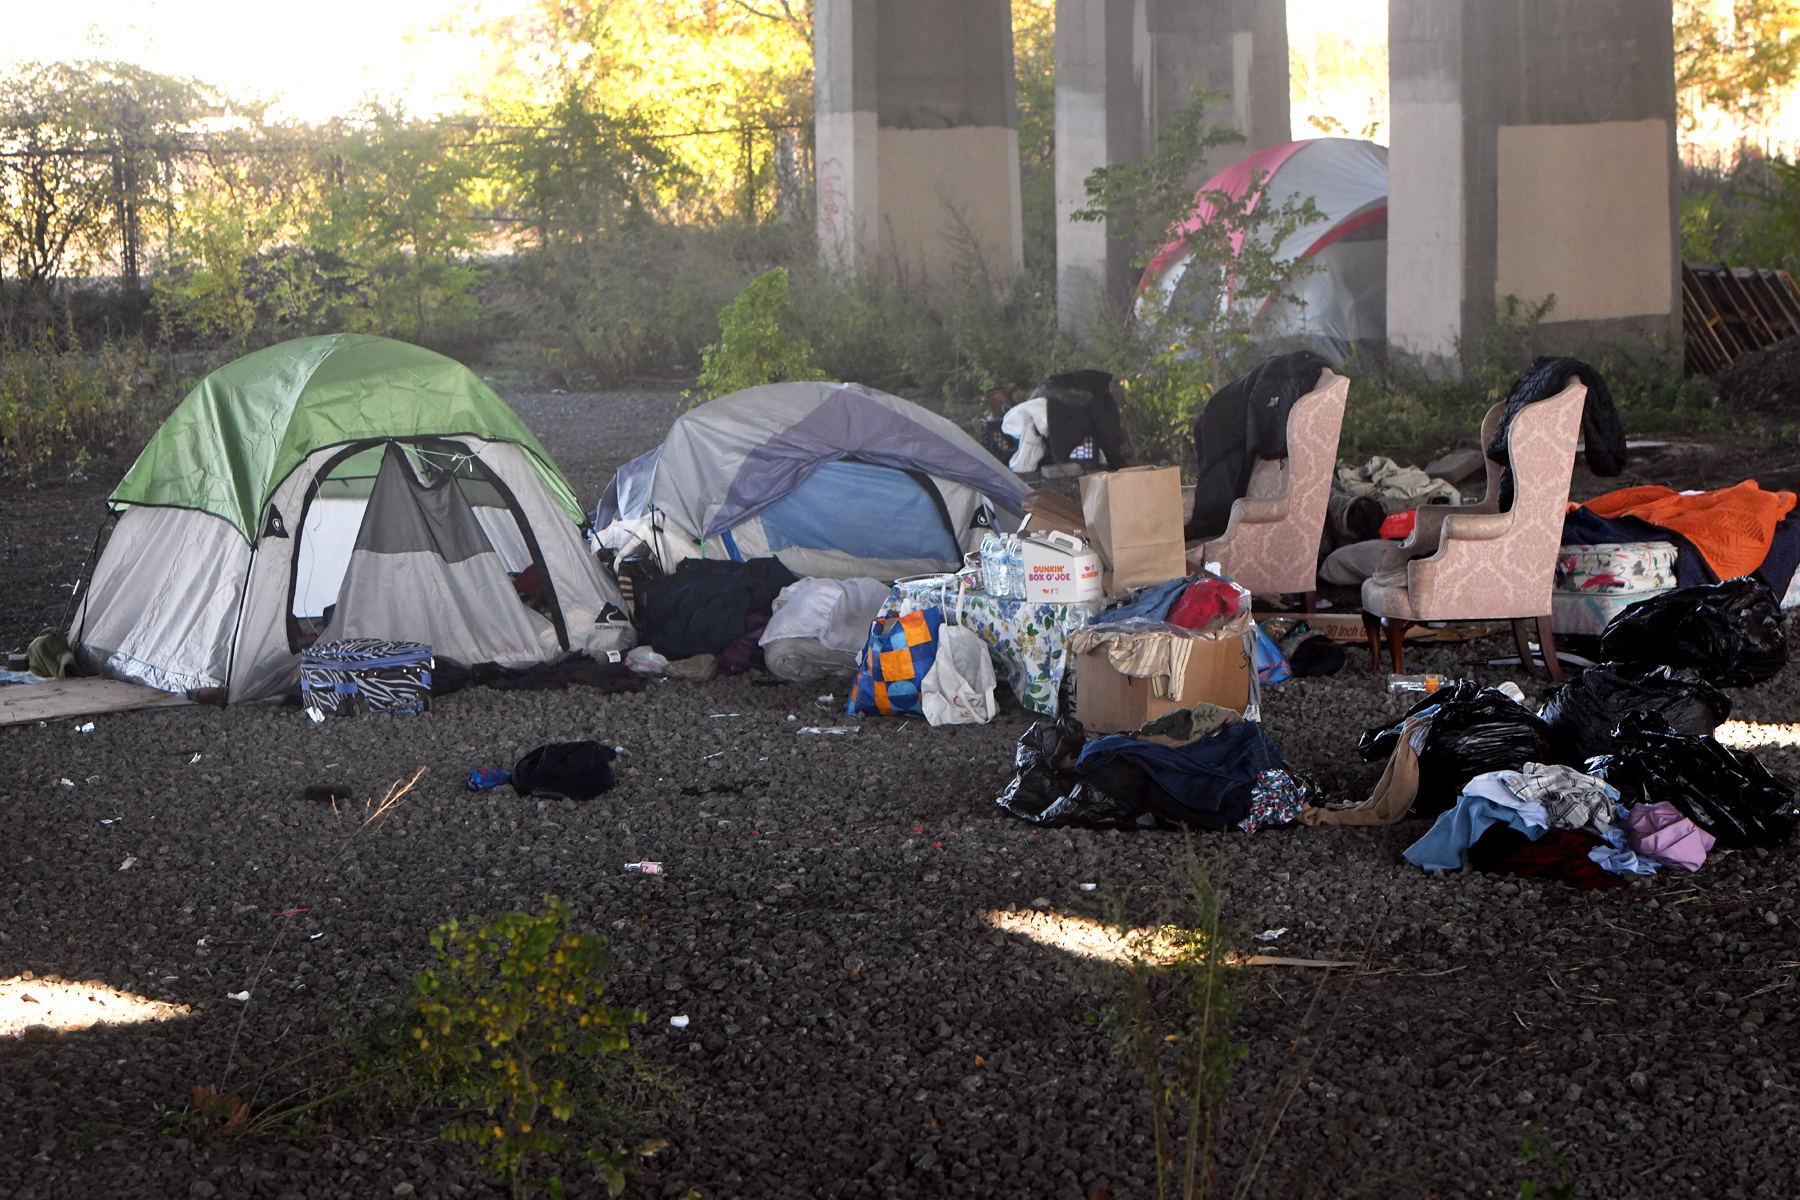 Bridgeport's 'Tent City' seek shelter, some new camp